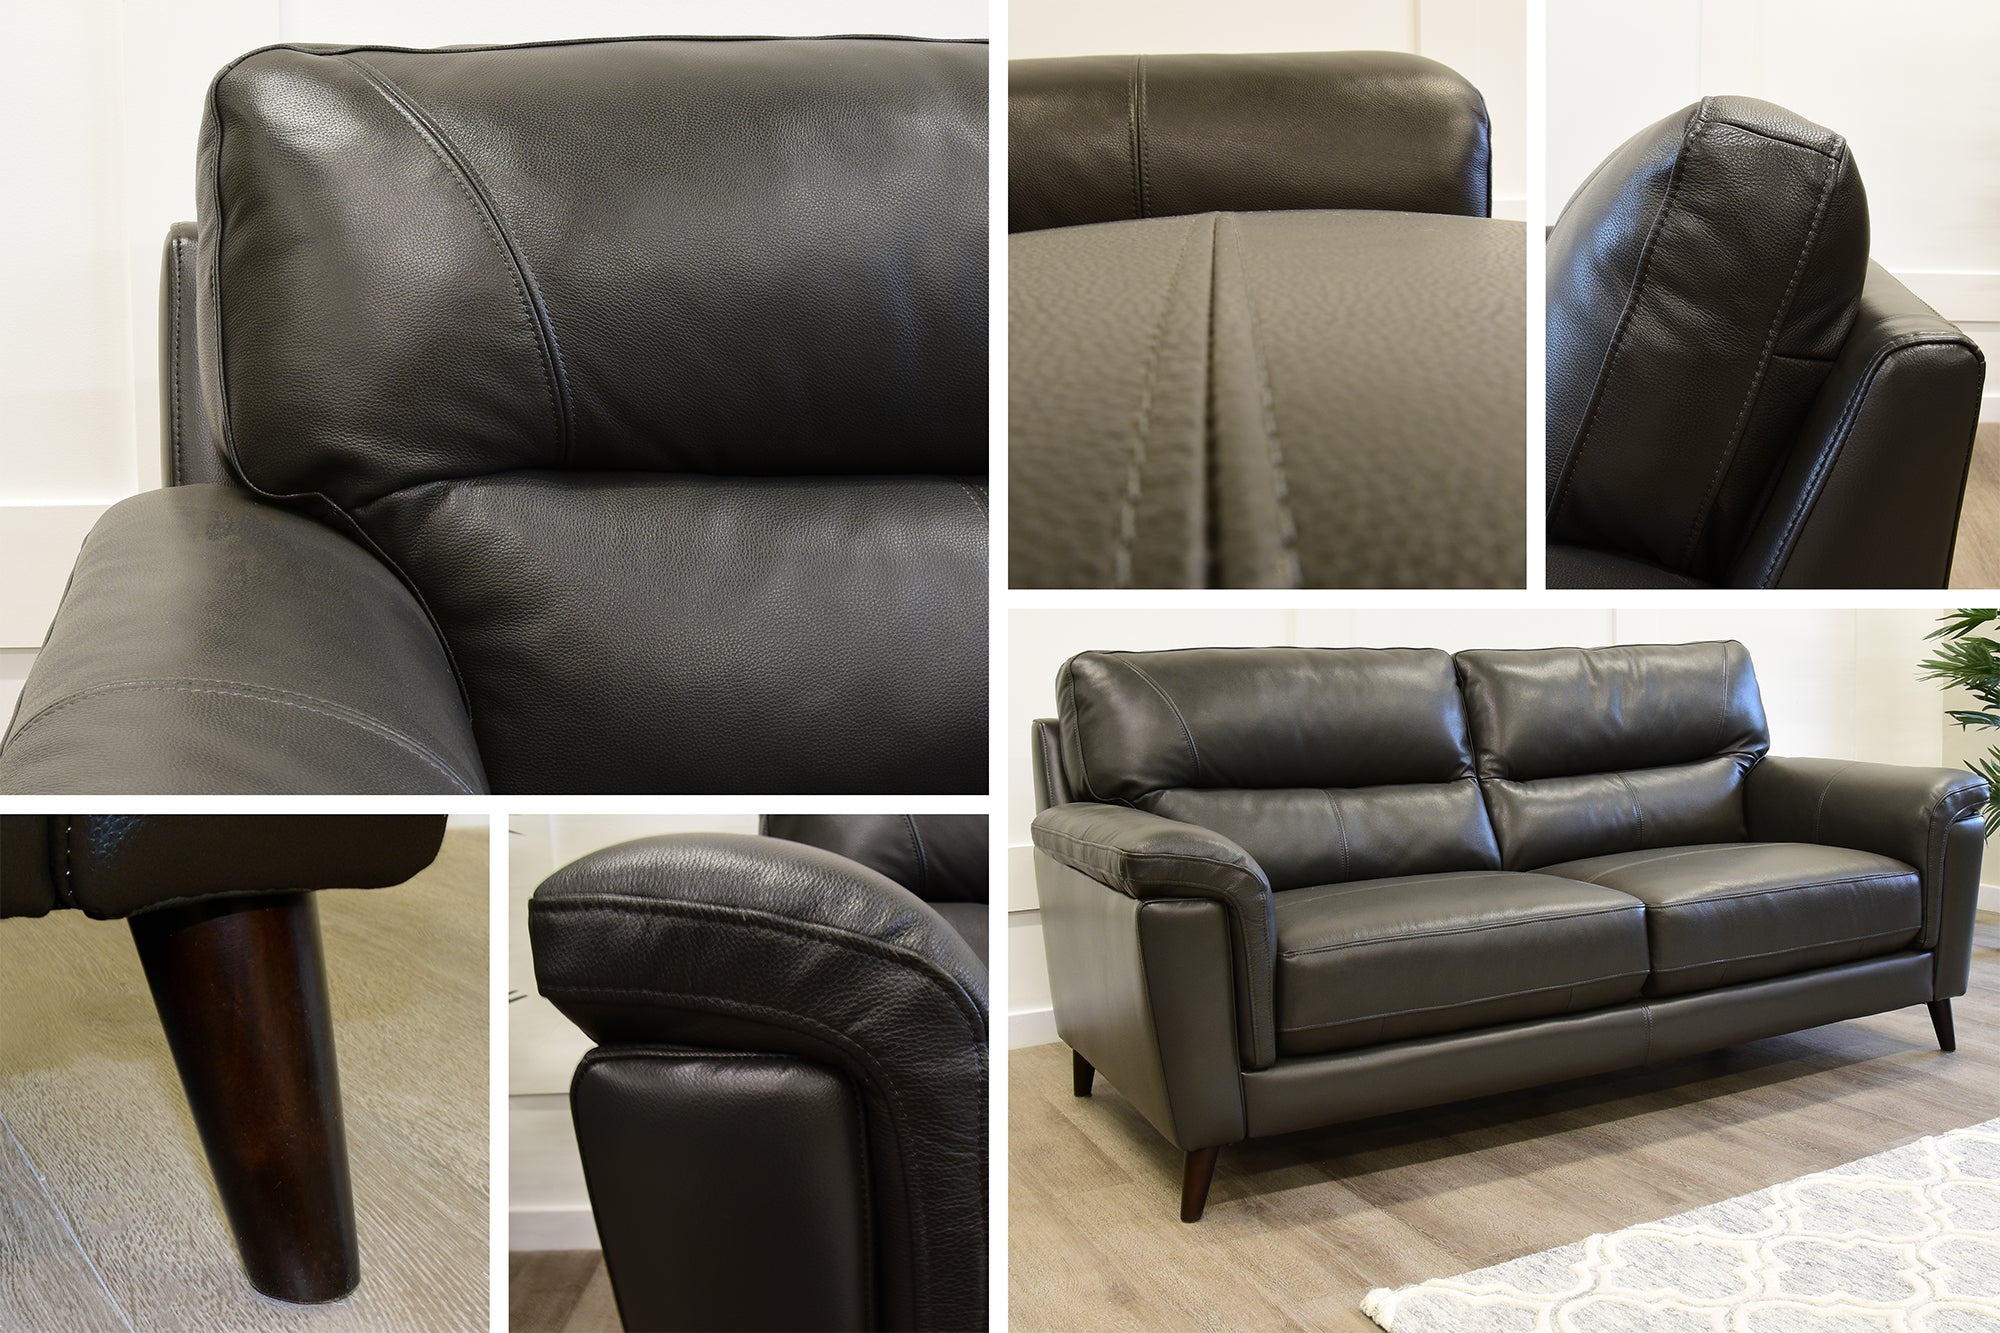 Lyon 3 Seater Leather Sofa